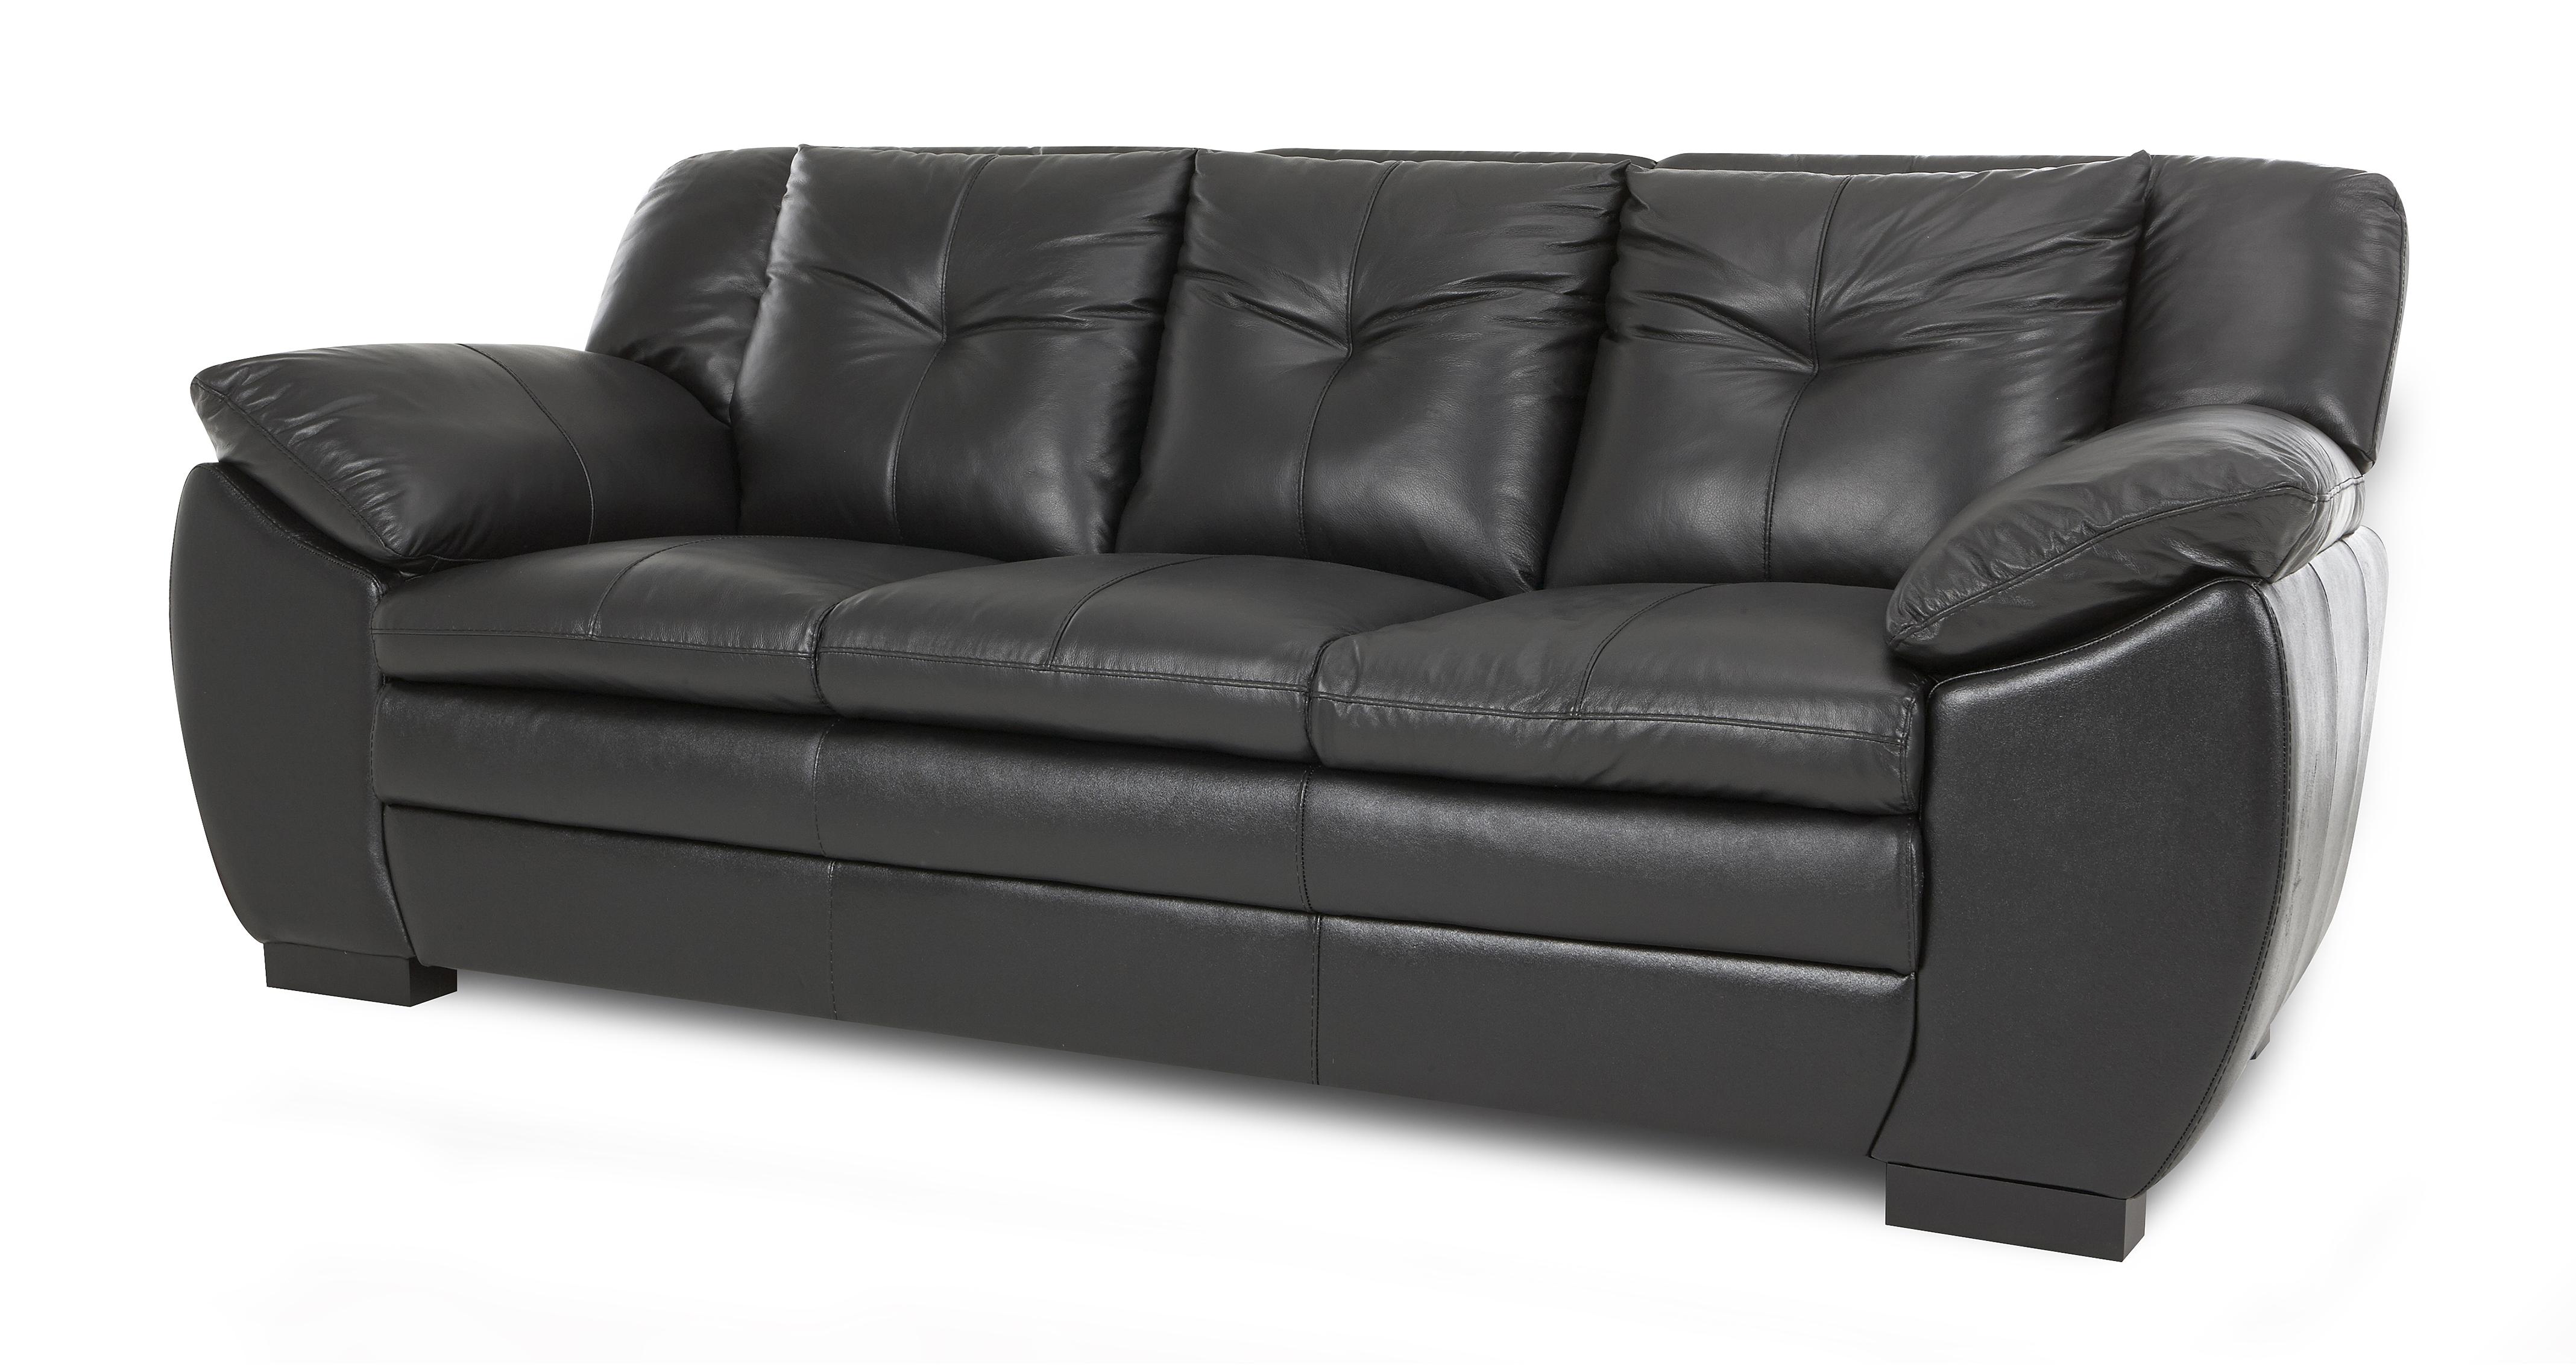 dfs leather sofa cushions sagging